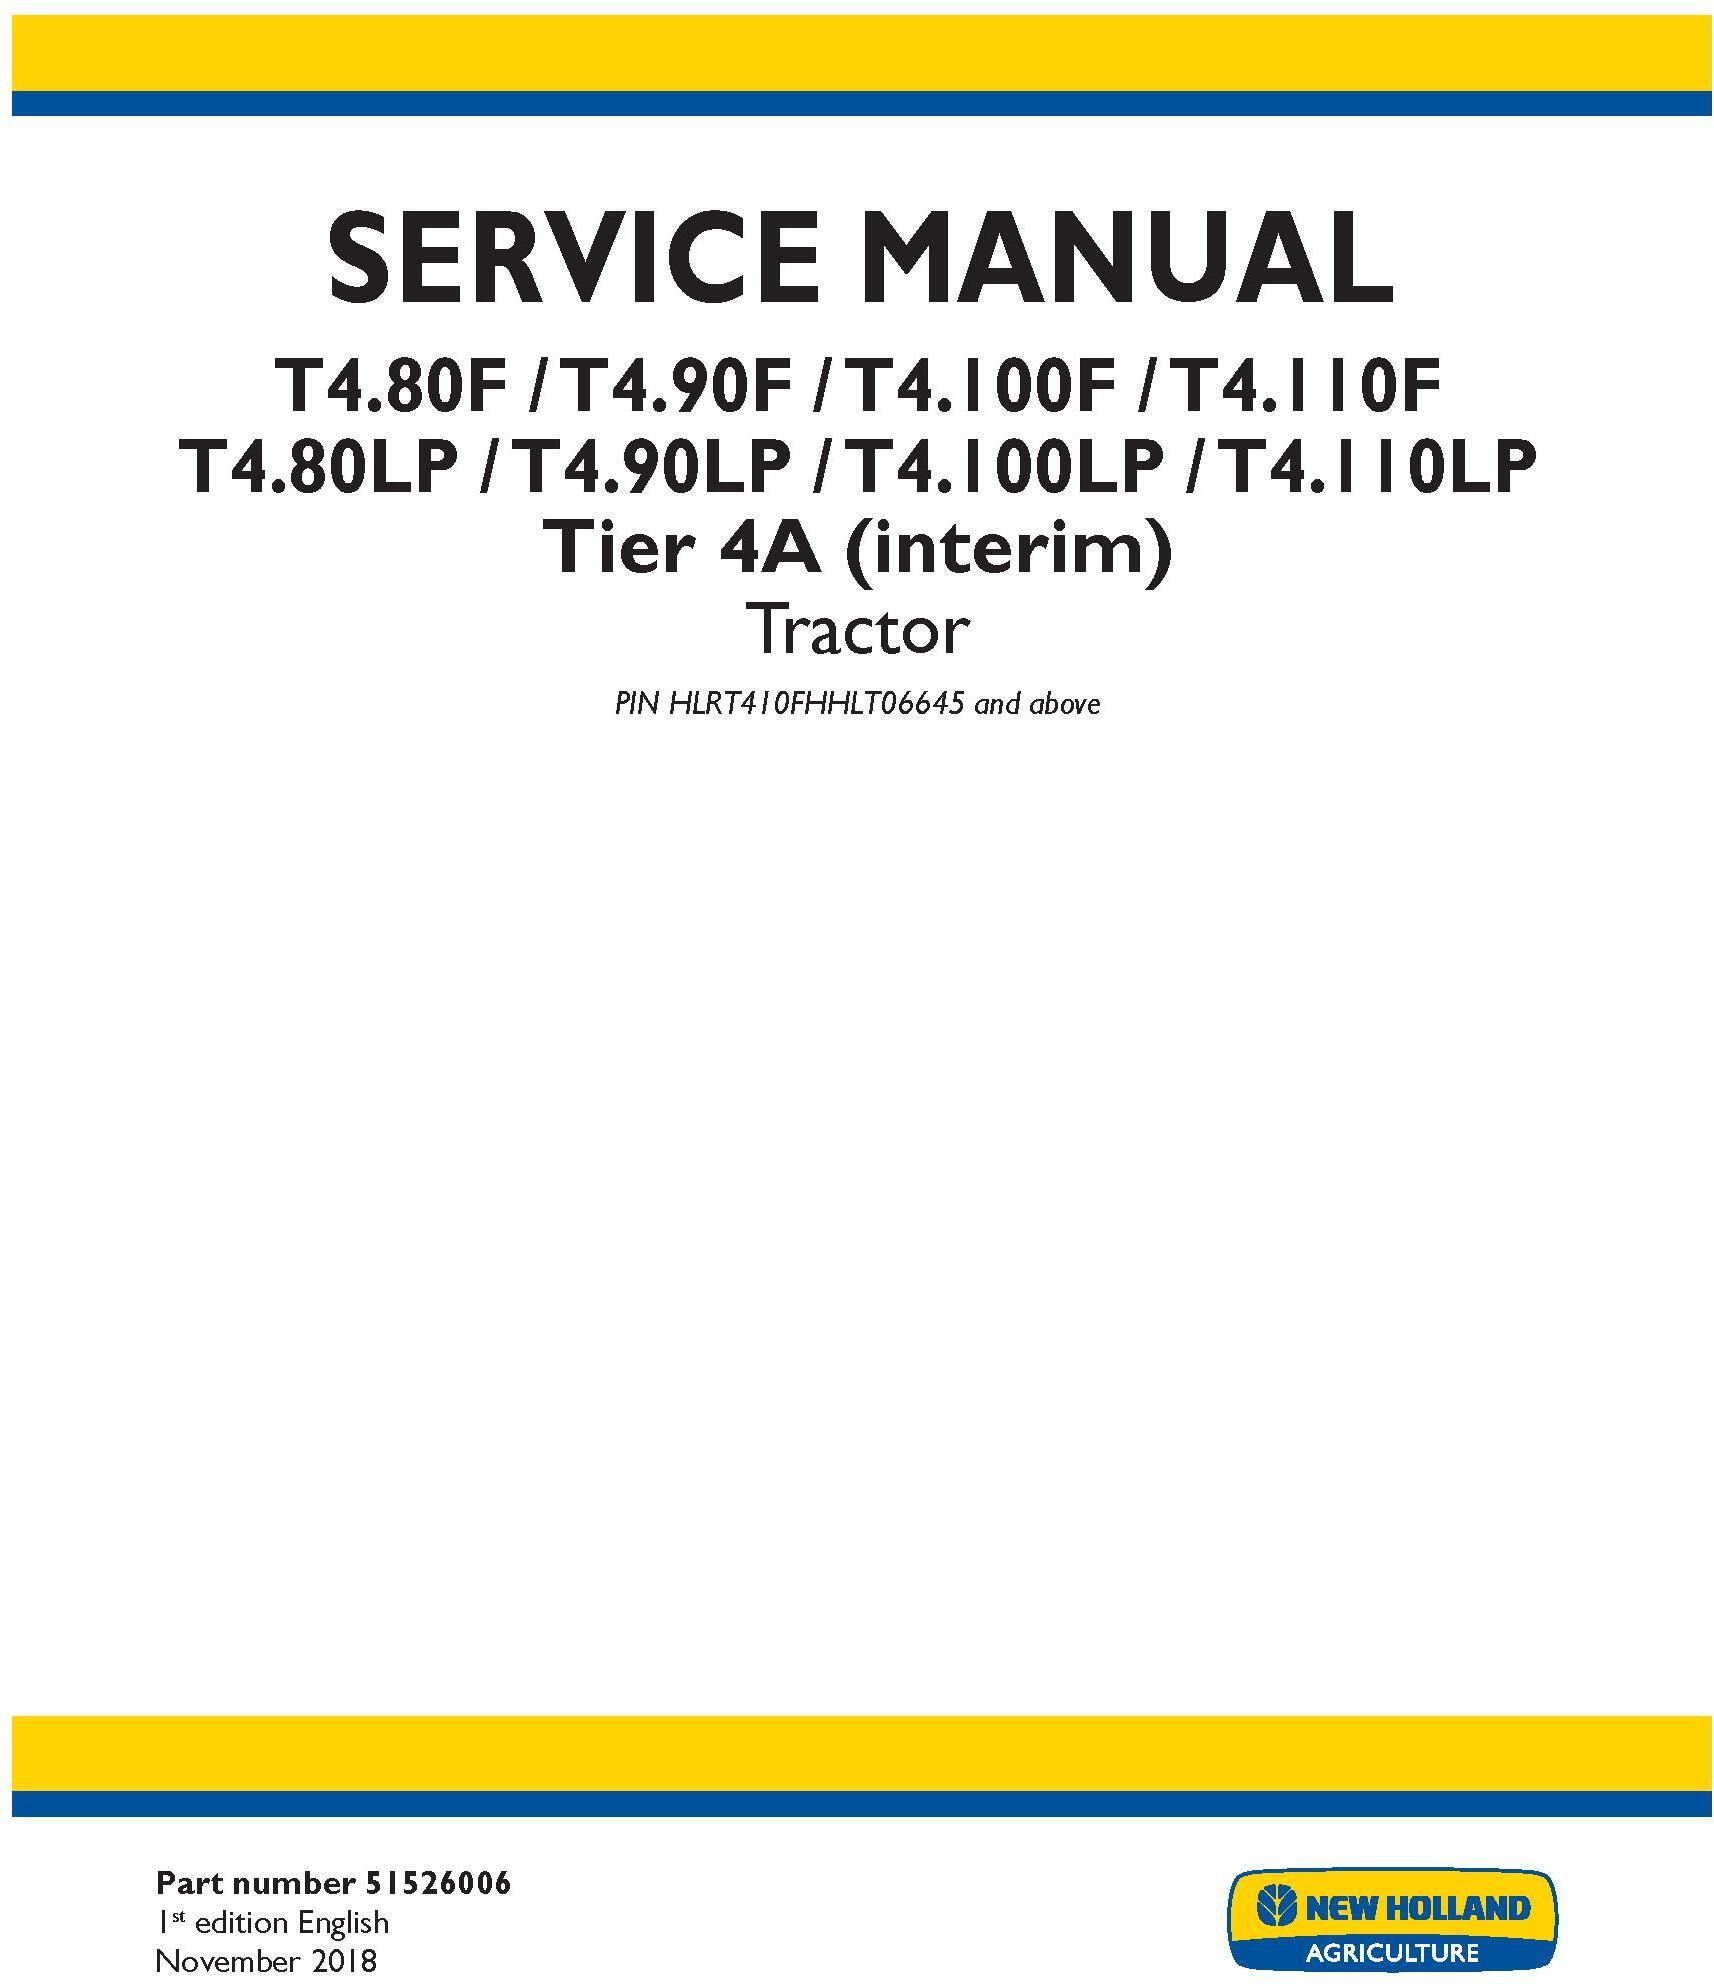 New Holland T4.80F/LP, T4.90F/LP, T4.100F/LP, T4.110F/LP Tier4A interim Tractor Service Manual (USA) - 19525